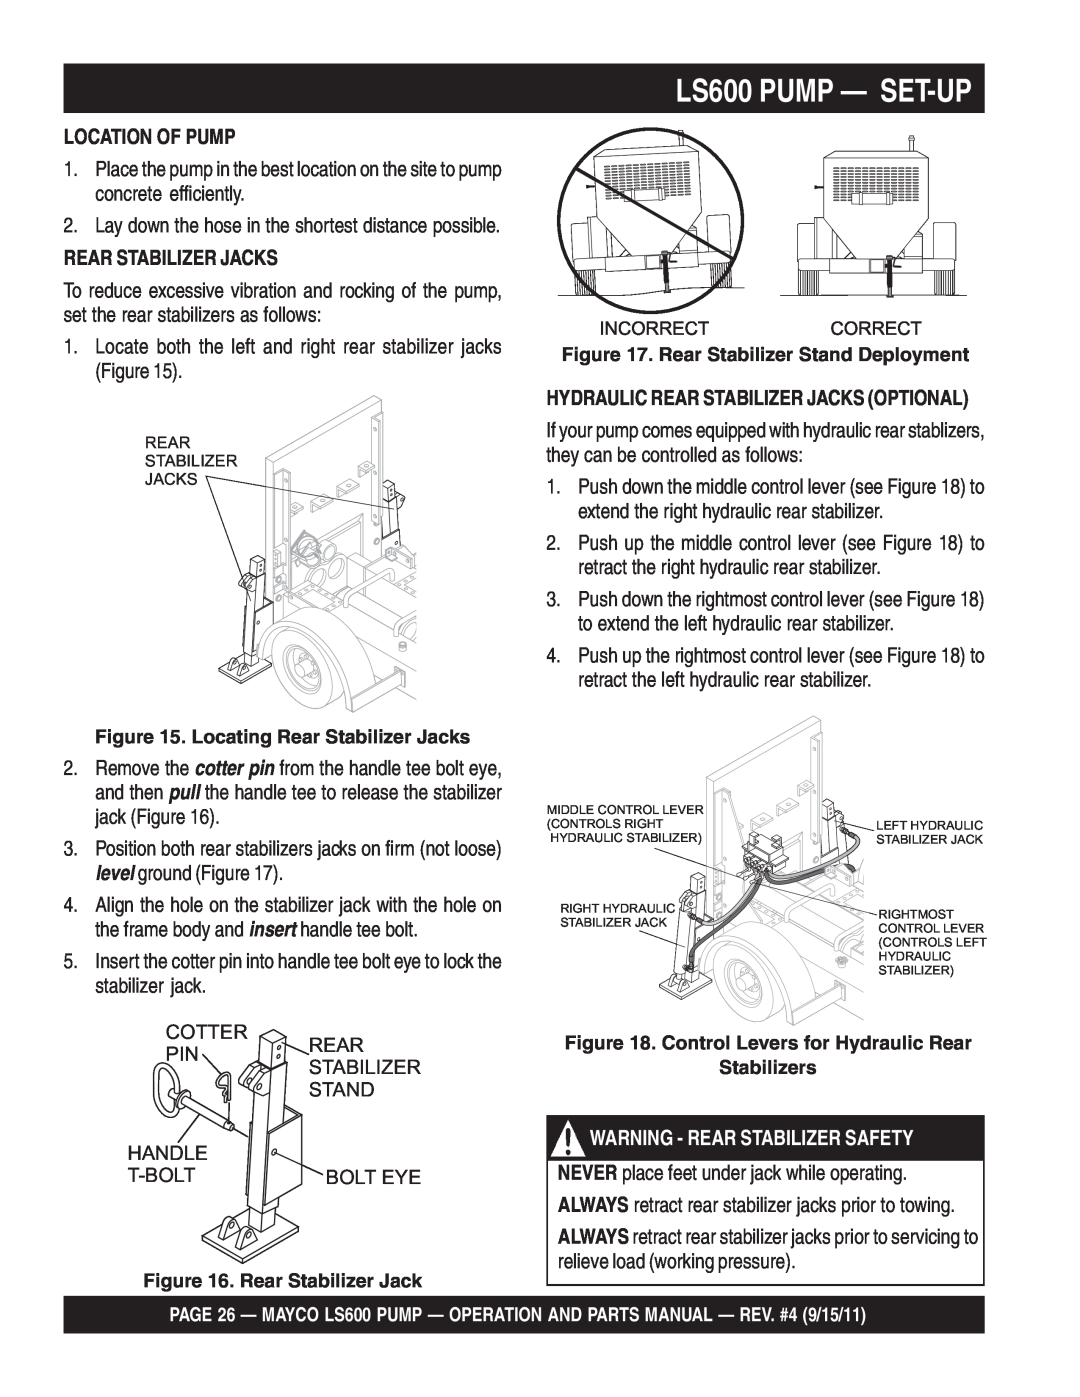 Multiquip manual LS600 PUMP — SET-UP, Location Of Pump, Hydraulic Rear Stabilizer Jacks Optional 